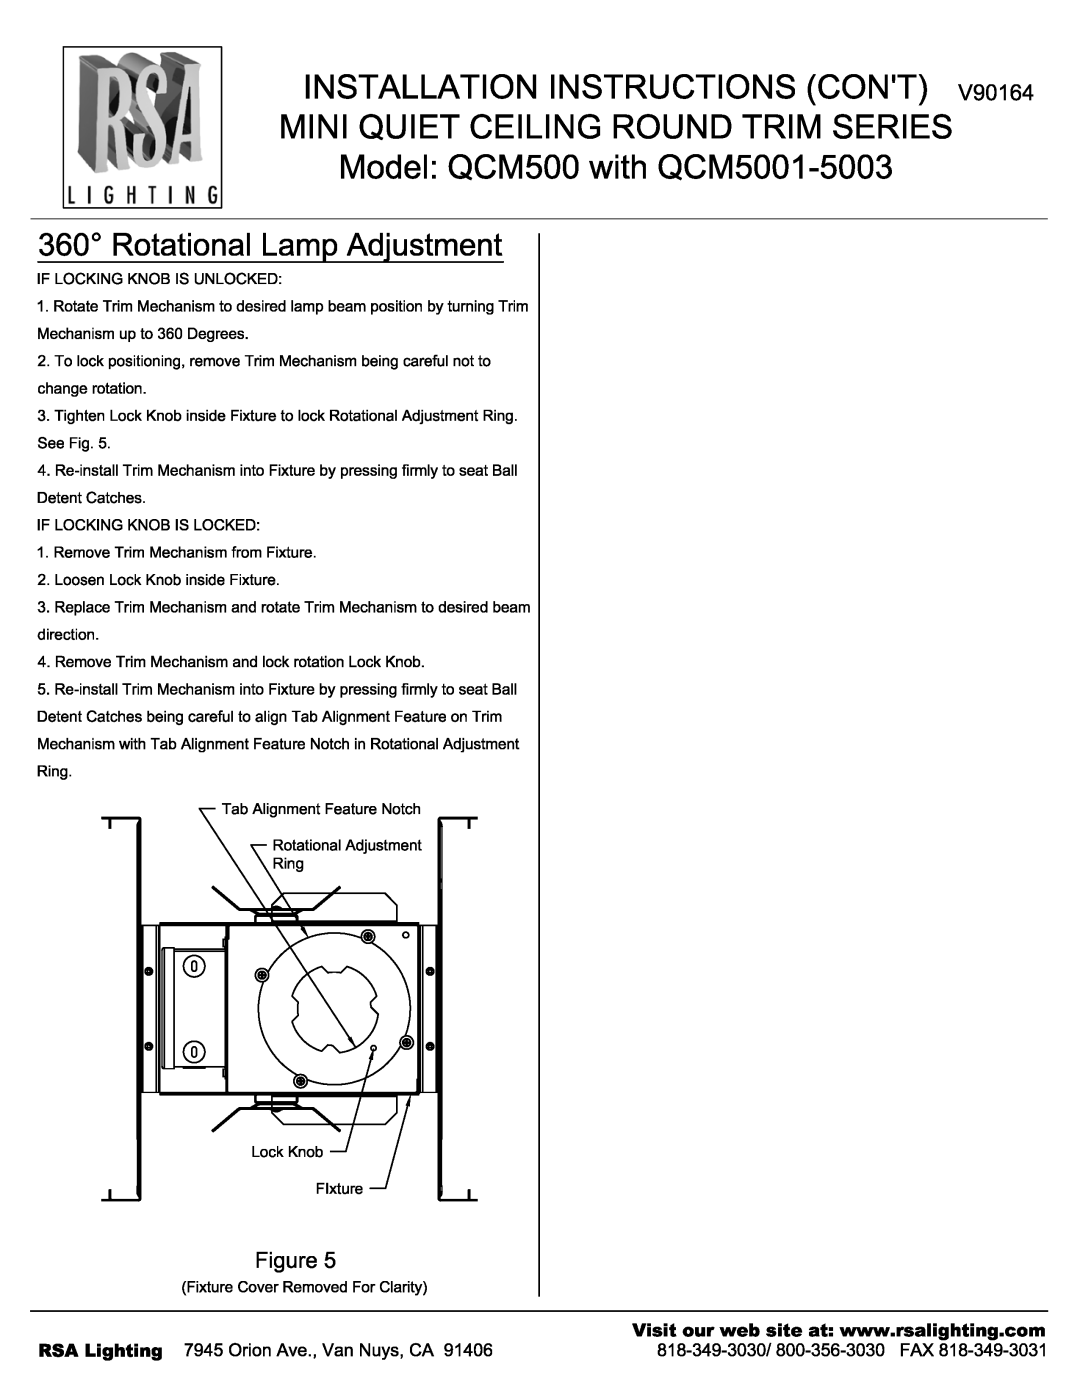 Cooper Lighting QCM5001-5003 manual 